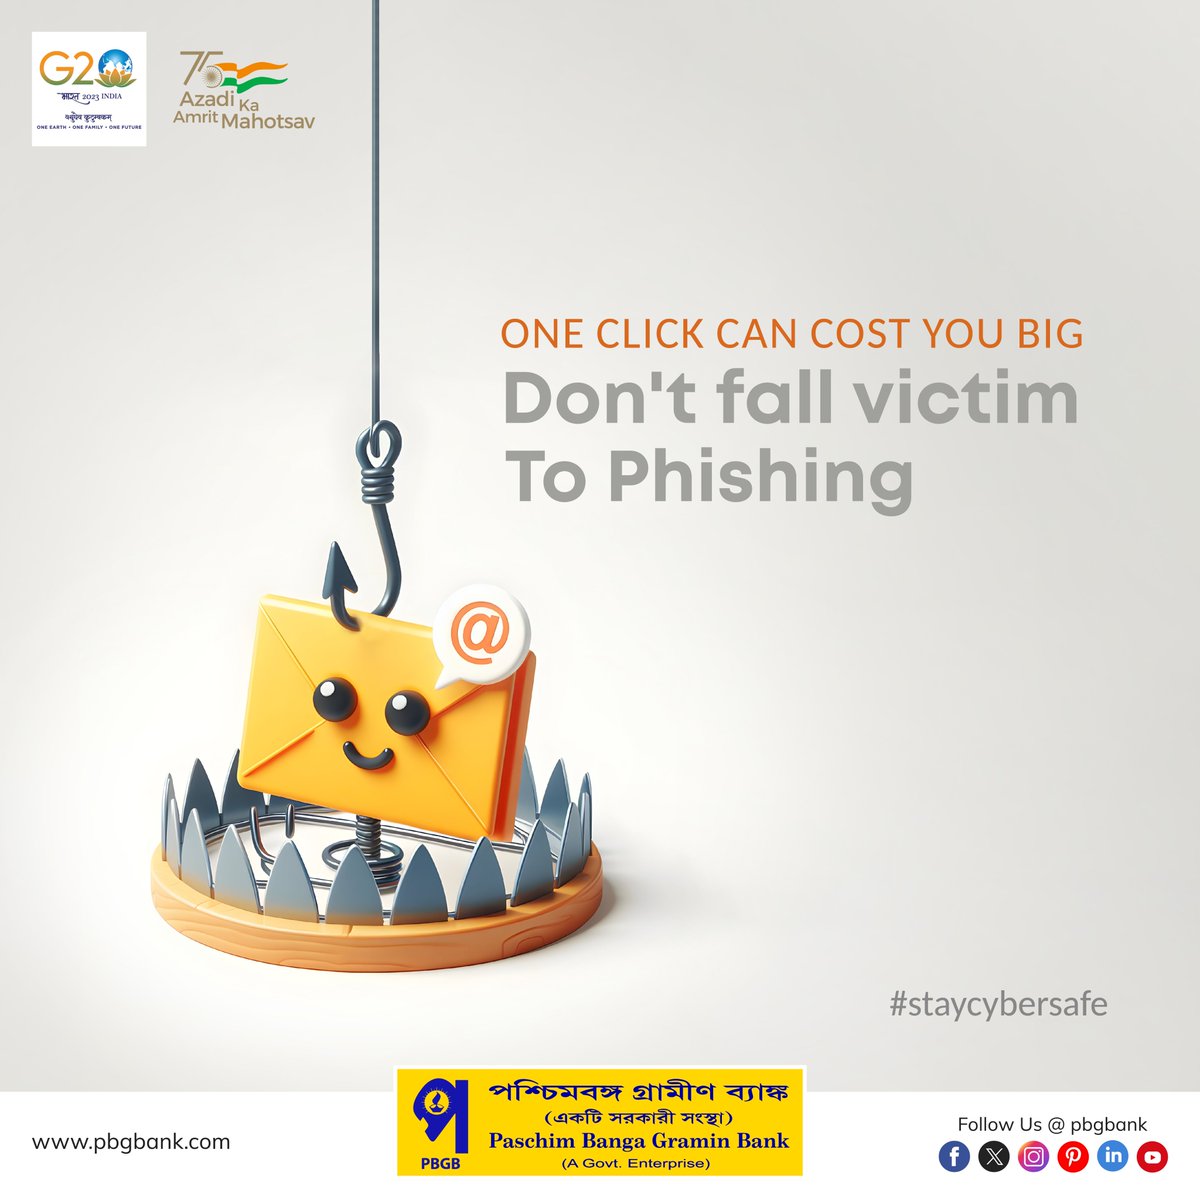 One click can cost you big
Don't fall victim to phishing

#paschimbangagraminbank #pbgb #cybersecurity #phishing #phishingattack #cyberscam #banking